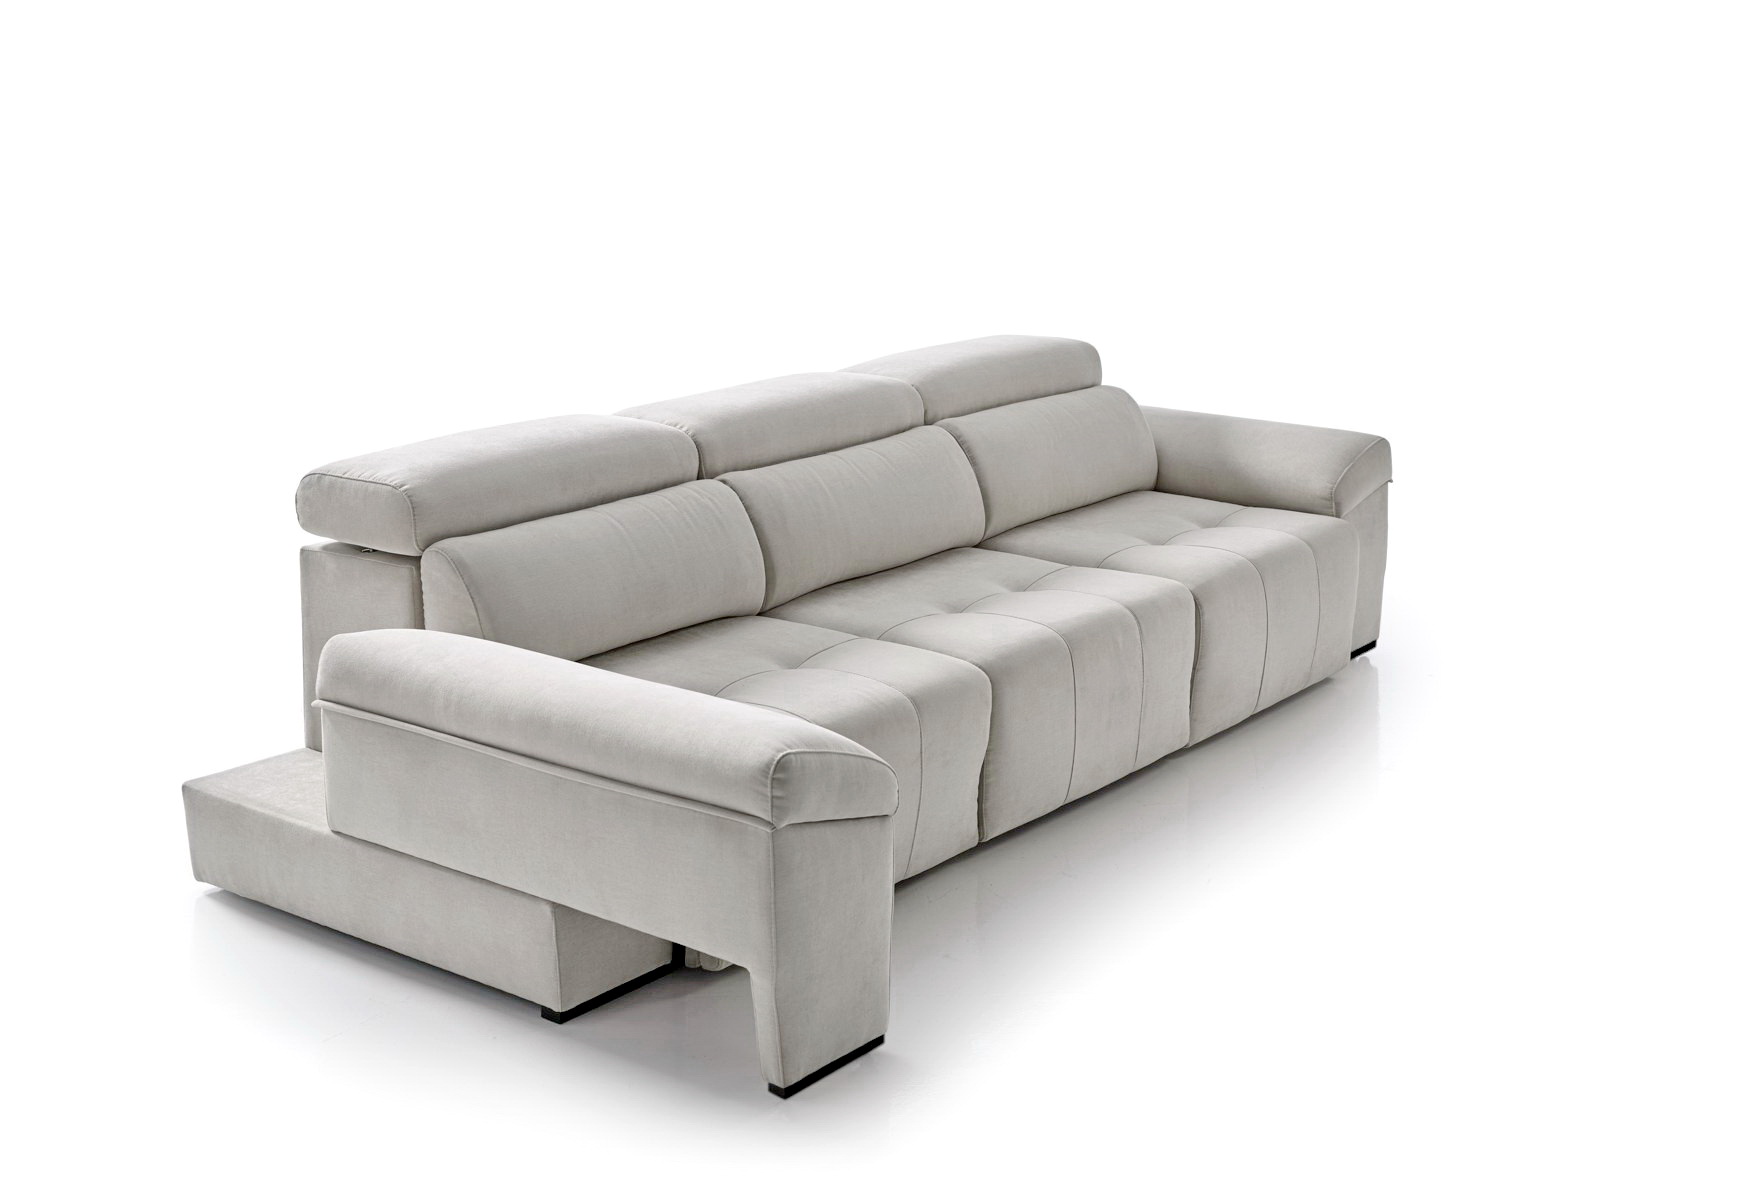 COKTEL 2 sofá modular transformable by Future Design Confort en muebles antoñán® León